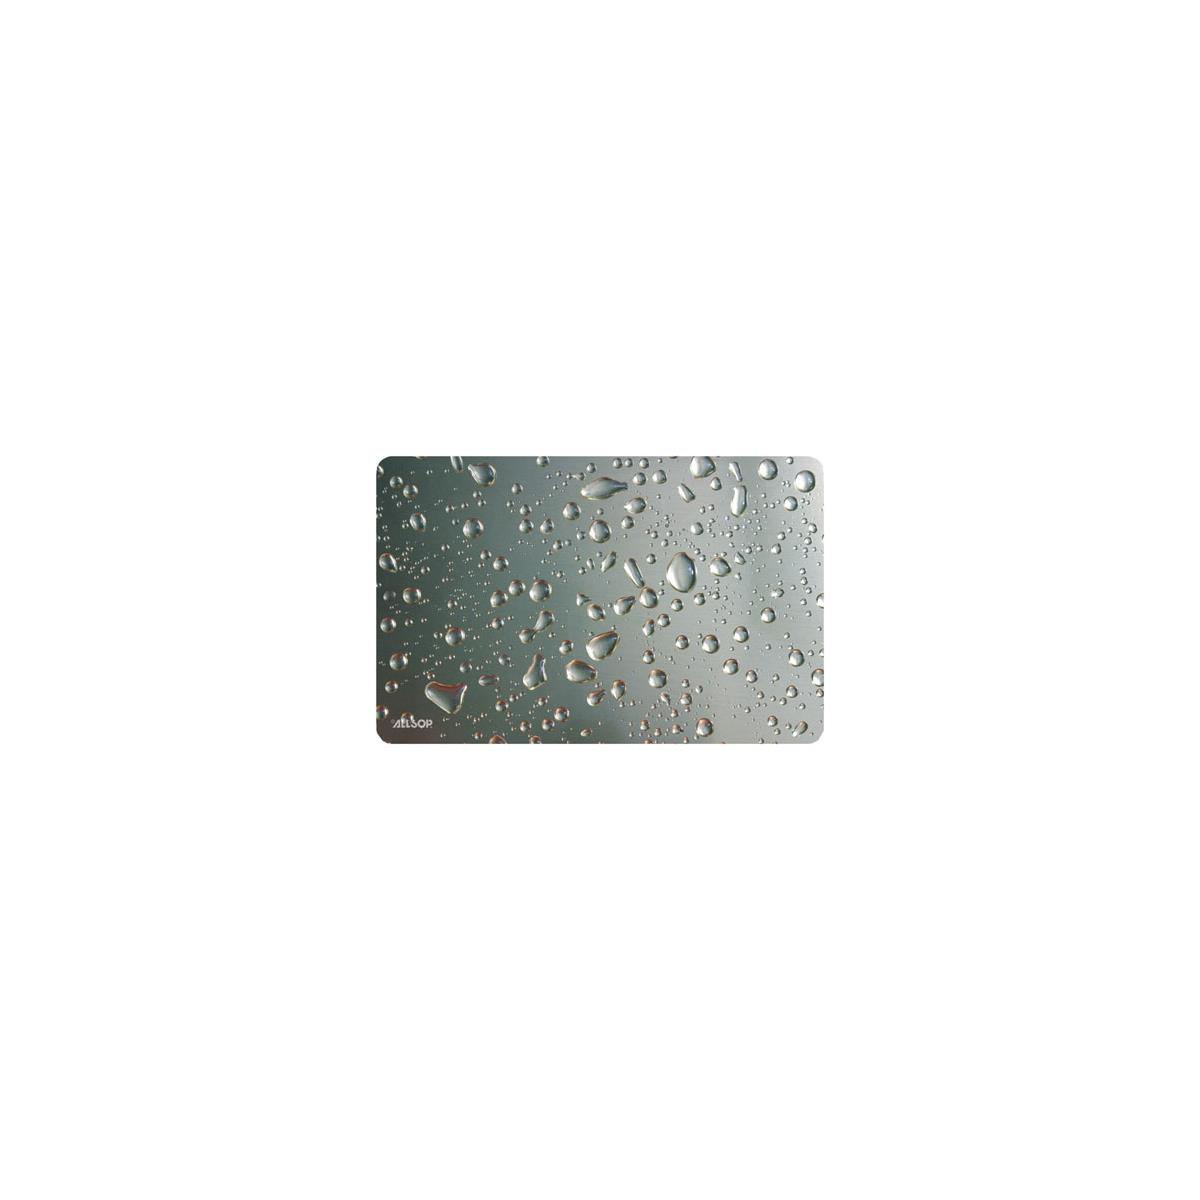 

Allsop Widescreen Mouse Pad, Metallic Raindrop